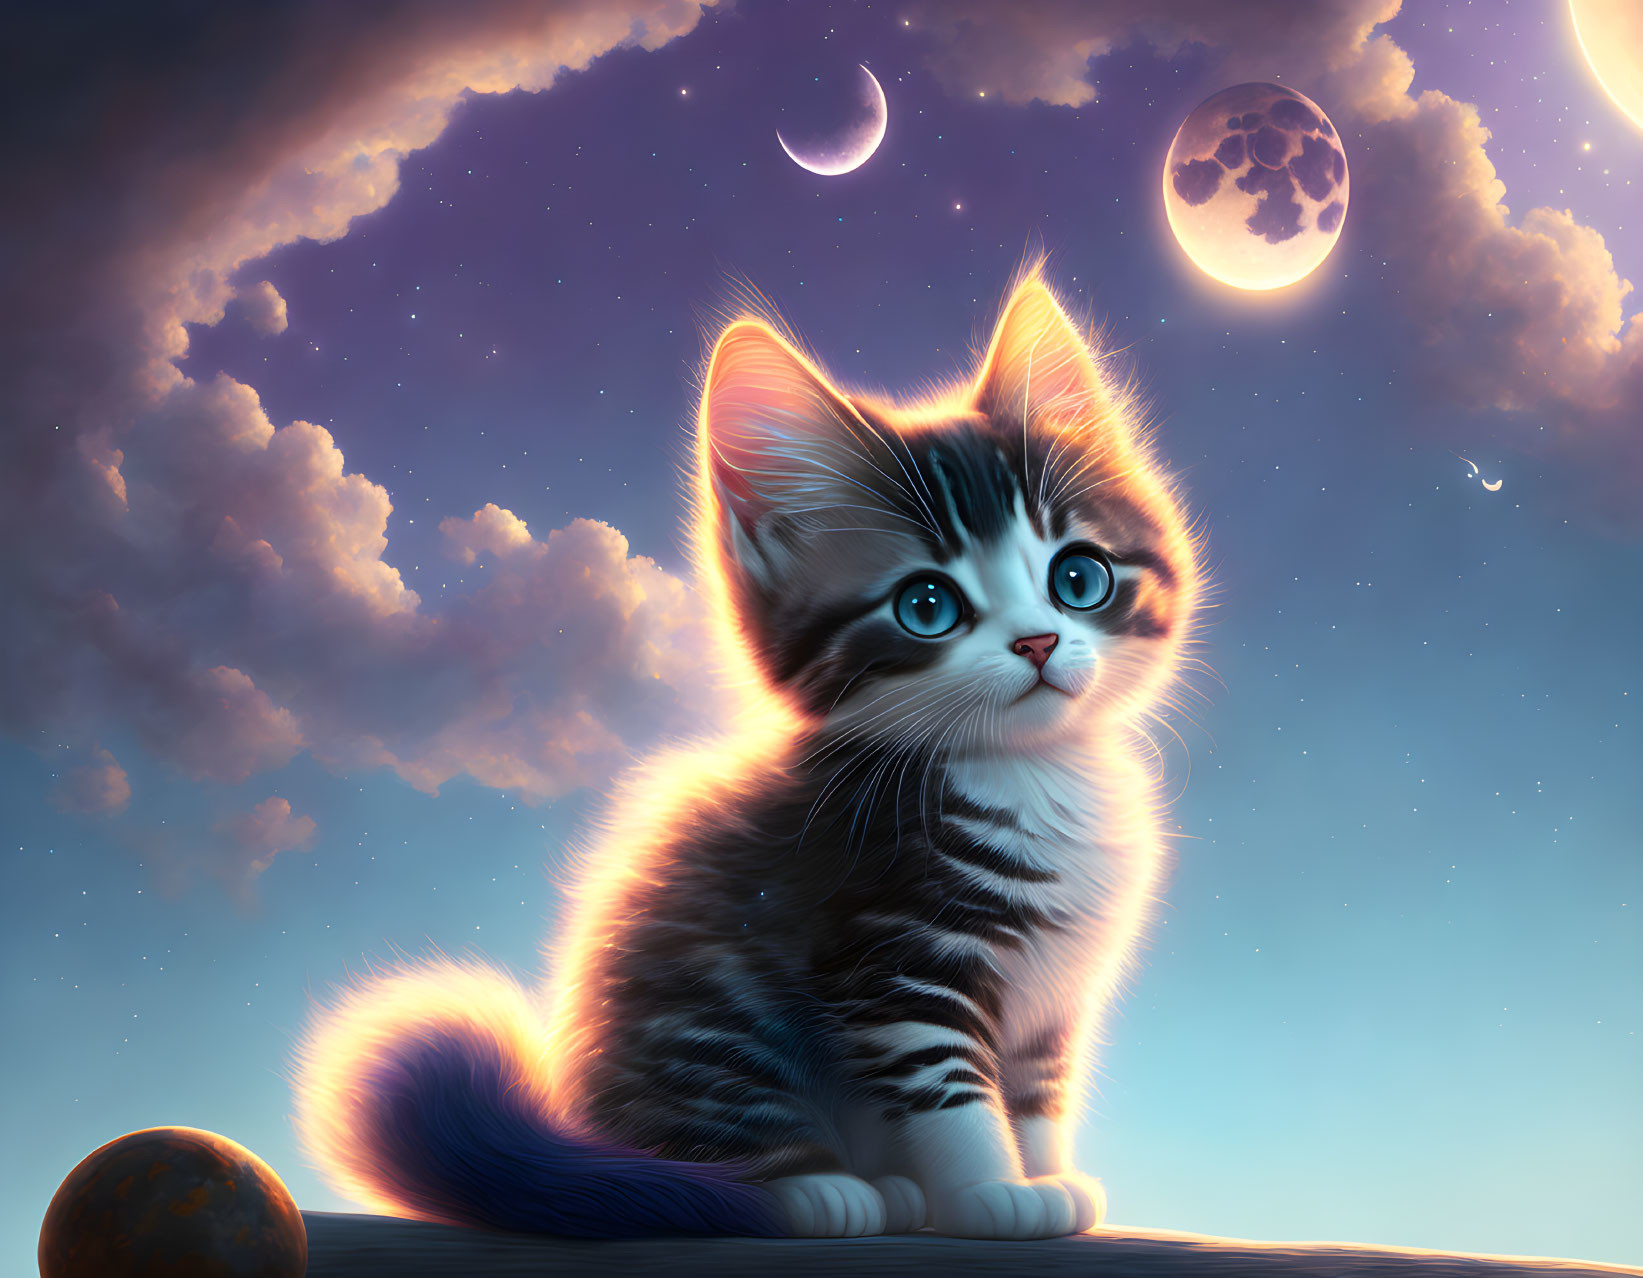 Illustration of wide-eyed kitten under multiple moons and stars